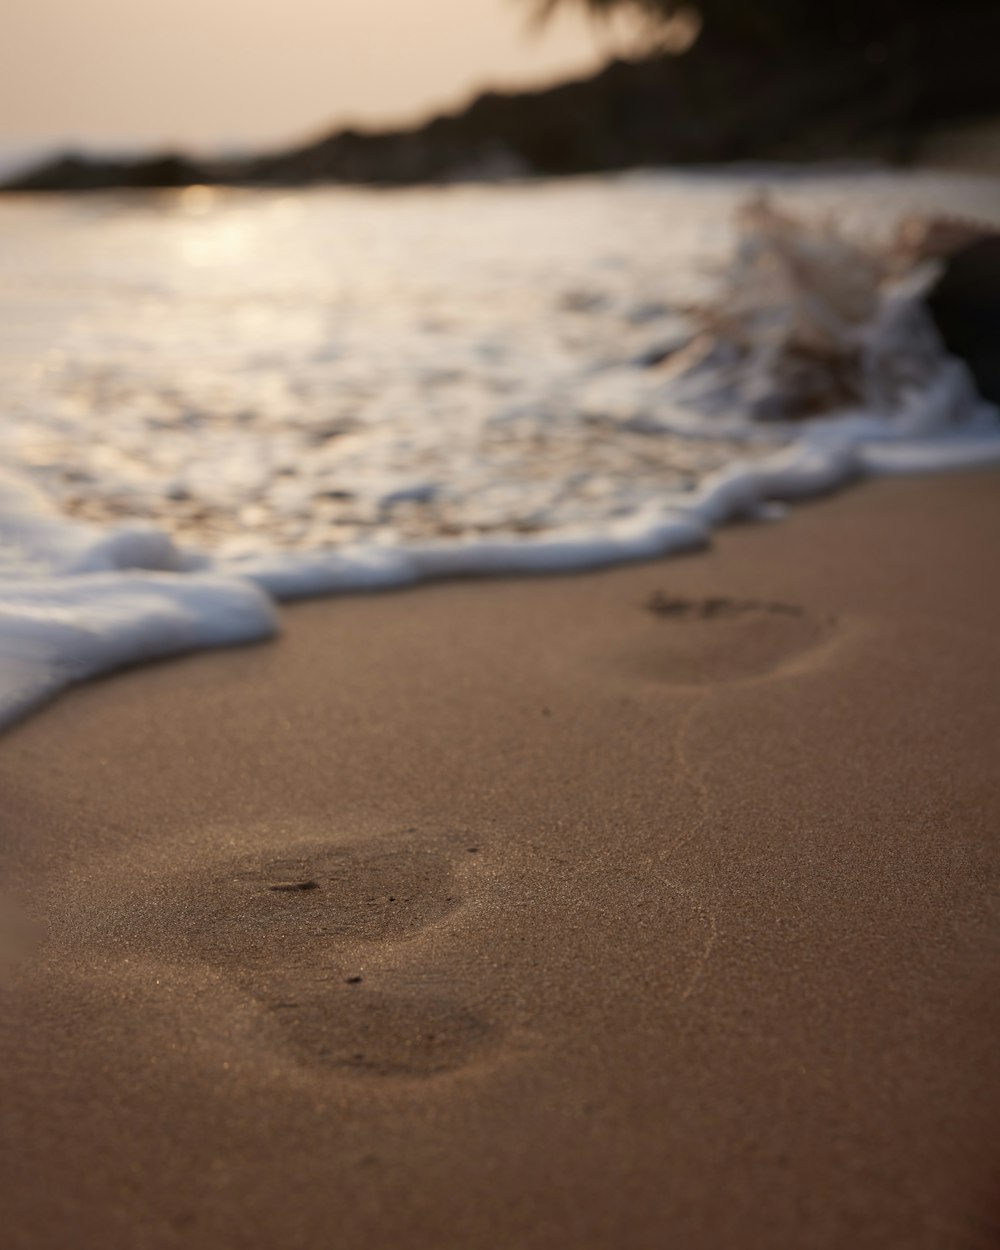 footprints in the sand of a beach near the ocean